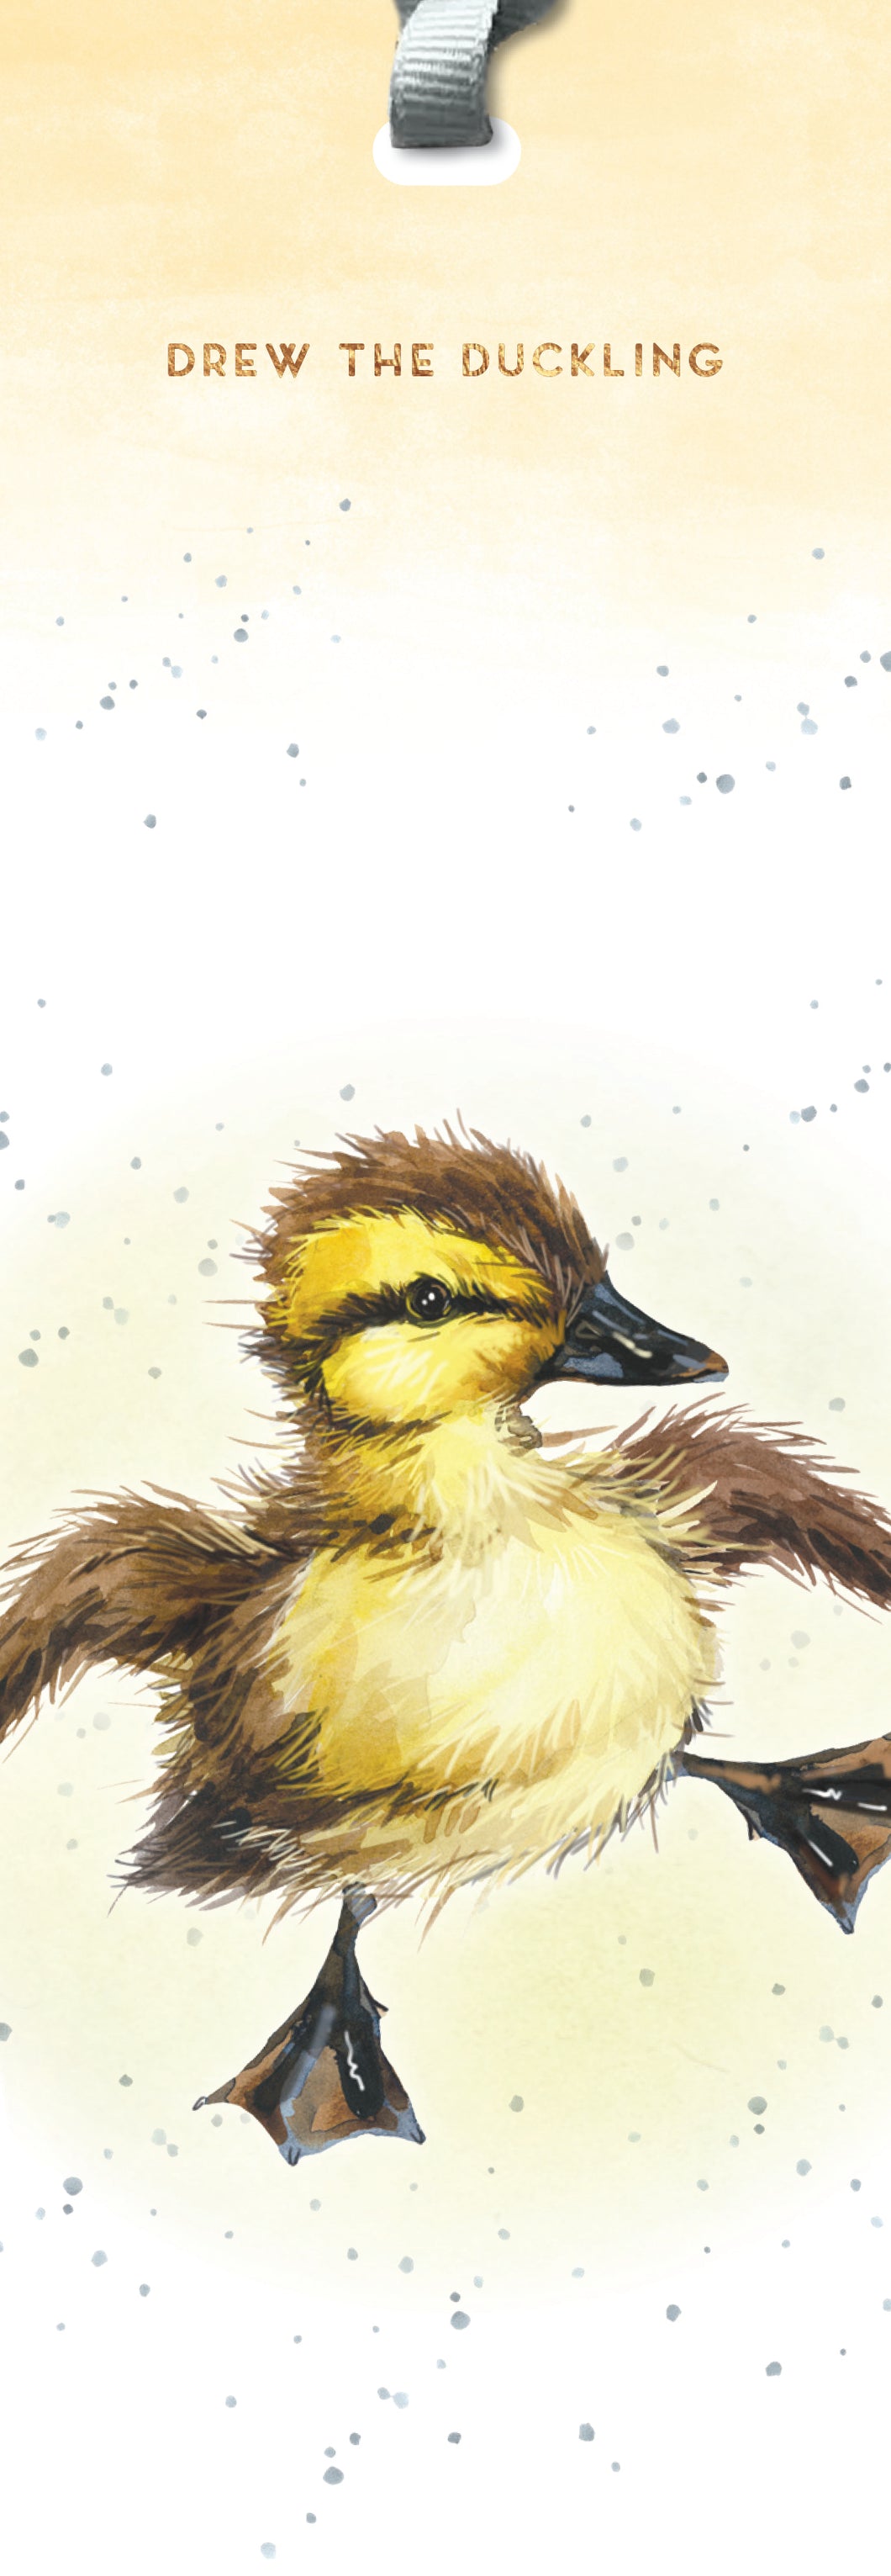 Hopper Studios Bookmark - Drew the Duckling